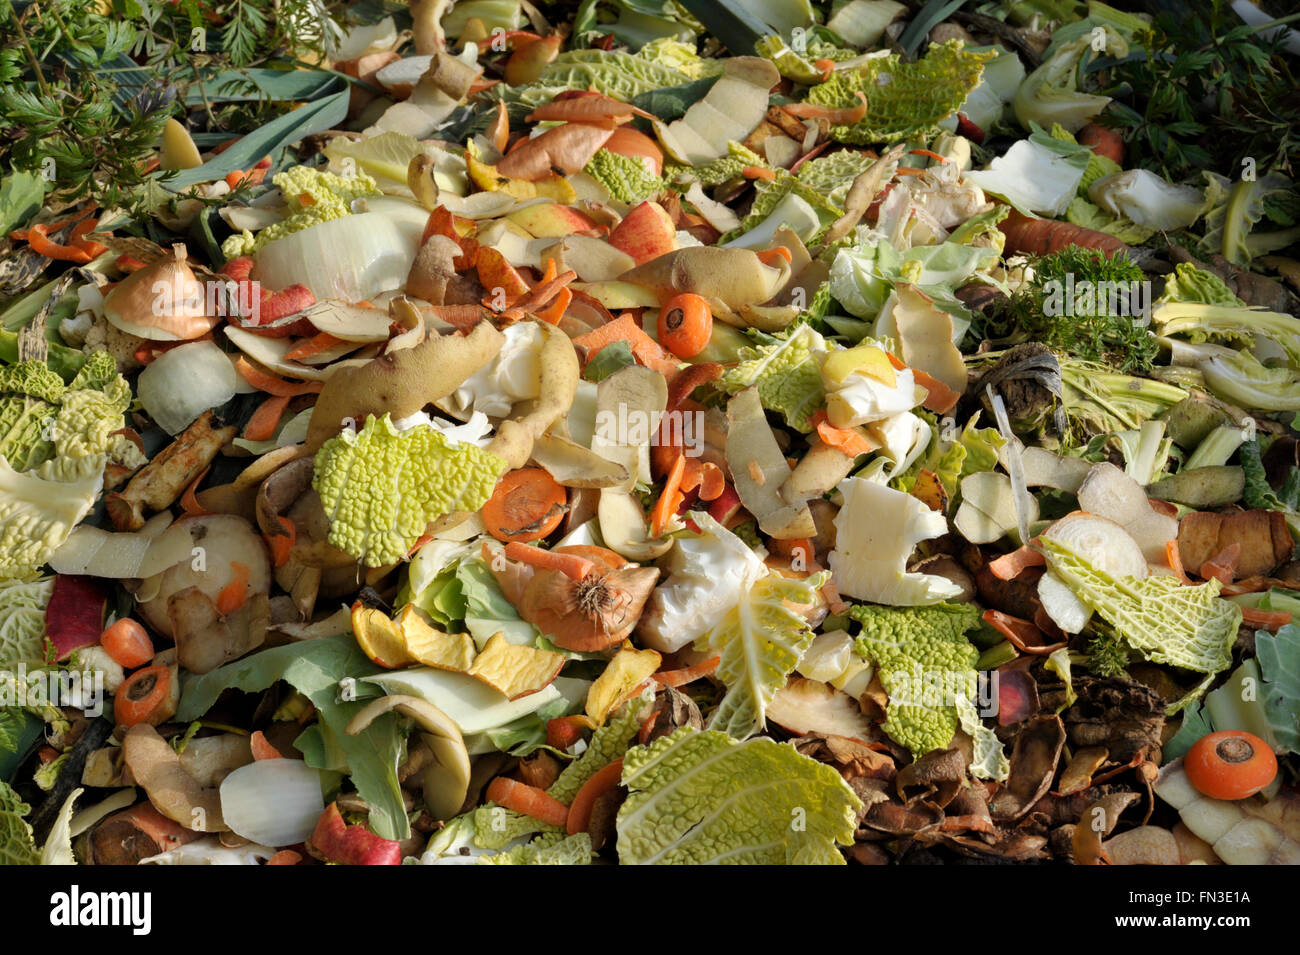 Cocina de residuos comida de plástico 2.5 litros de compost Caddy Titular de verduras NUEVO 